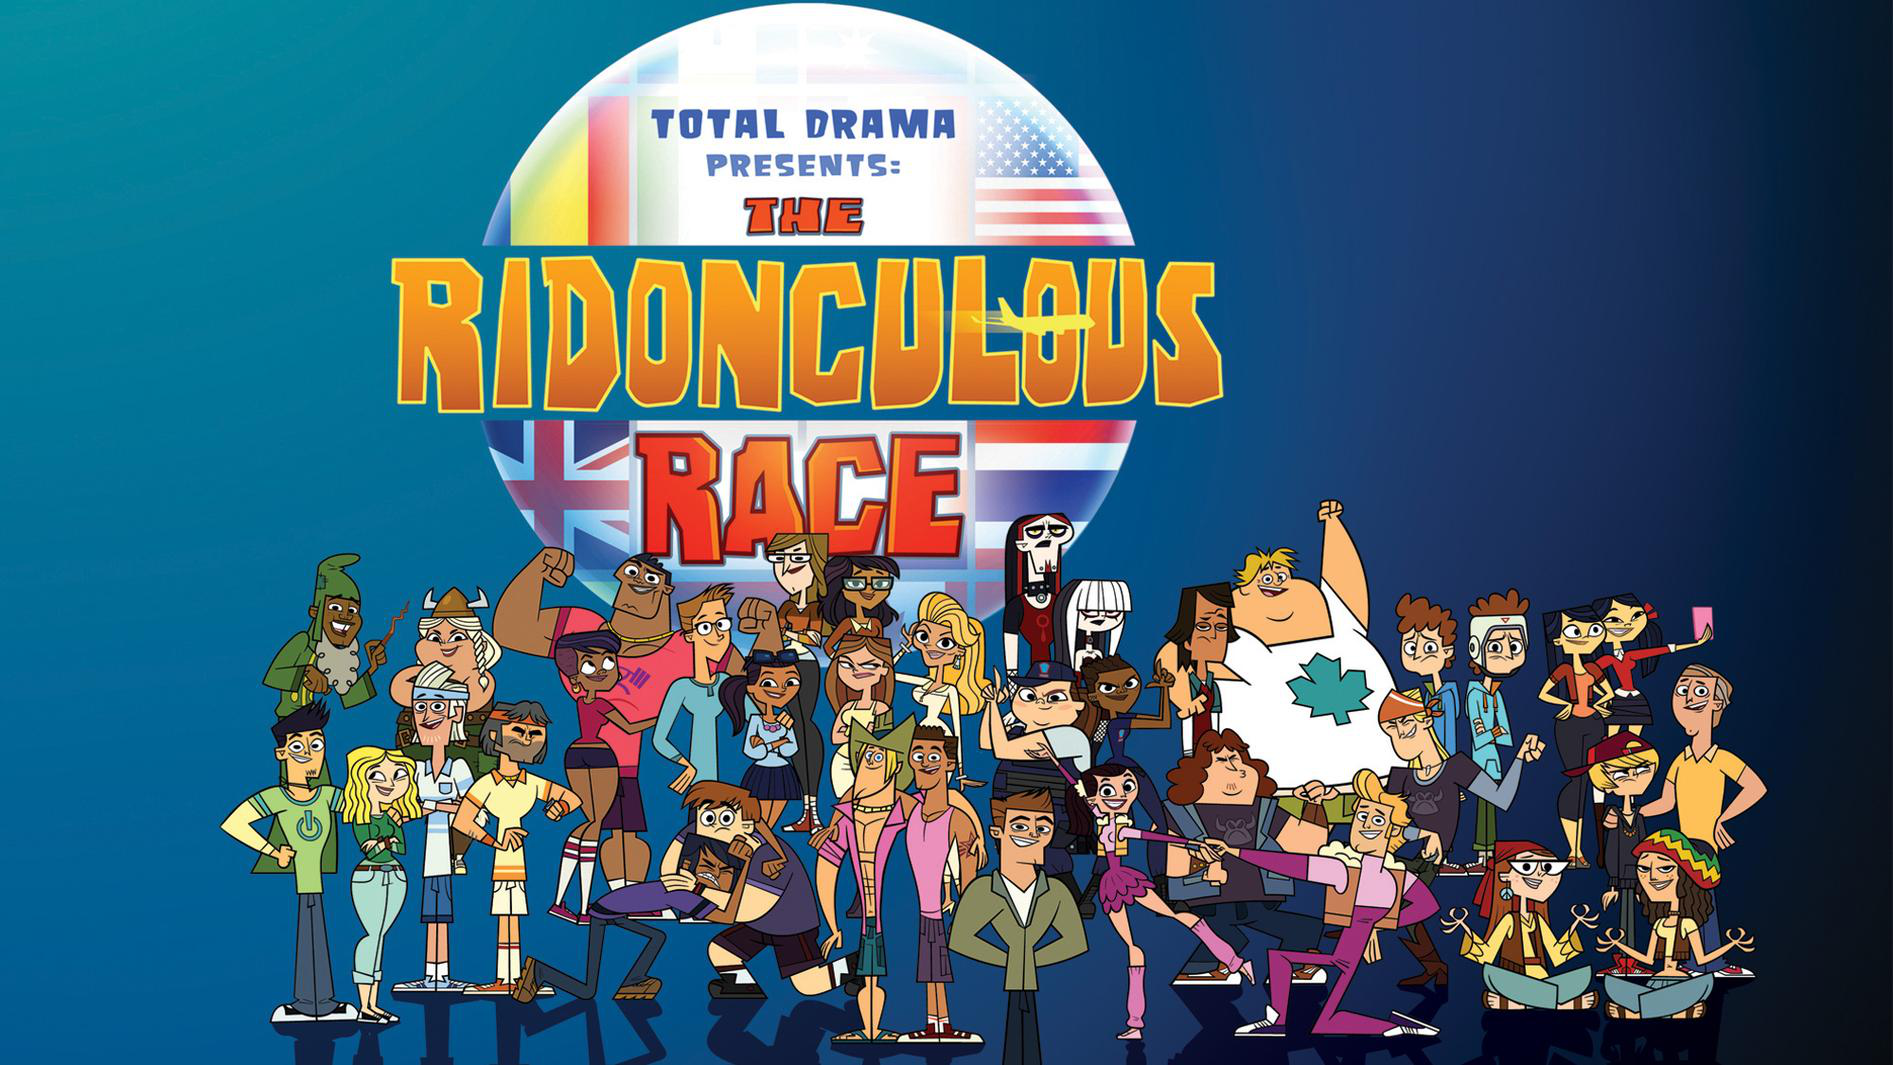 Total Drama Presents: The Ridonculous Race (TV Series 2015) - IMDb